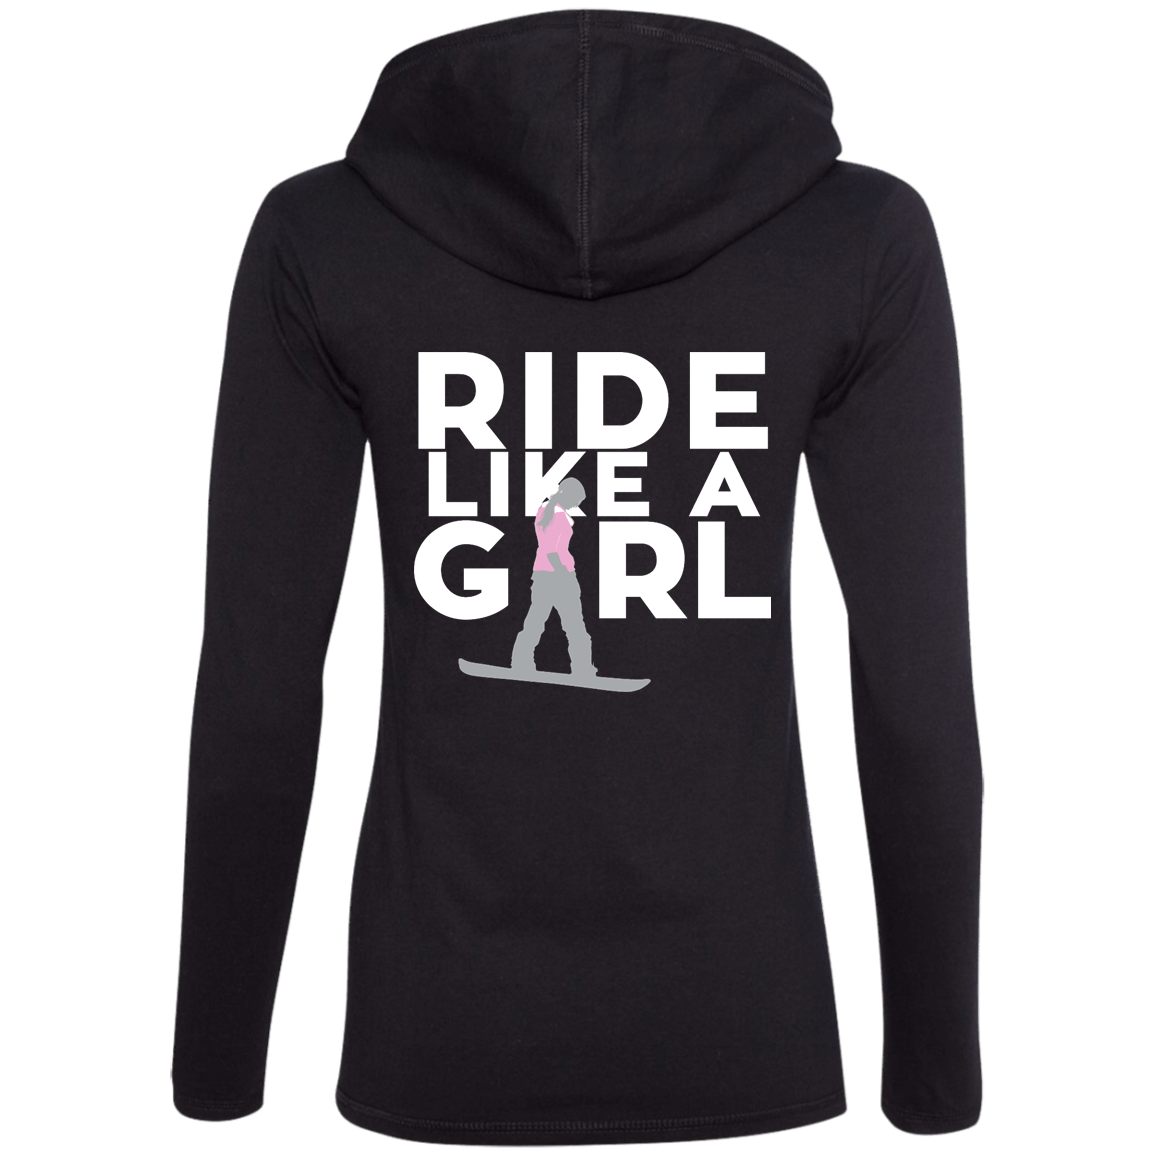 Ride Like A Girl Hoodies - Powderaddicts